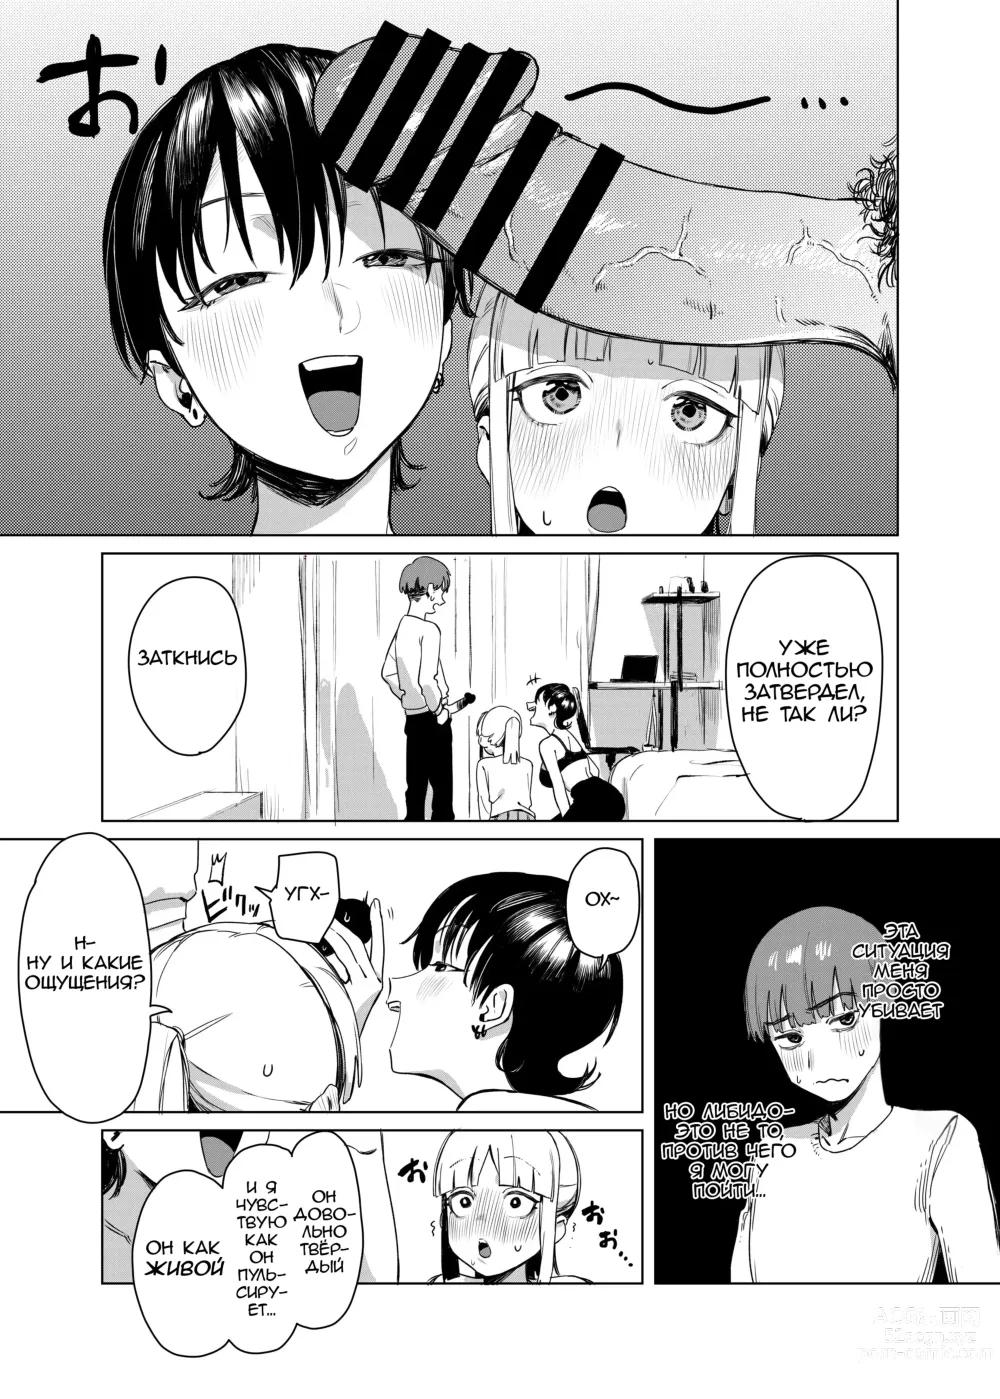 Page 5 of doujinshi Sandwiched By Yuri.